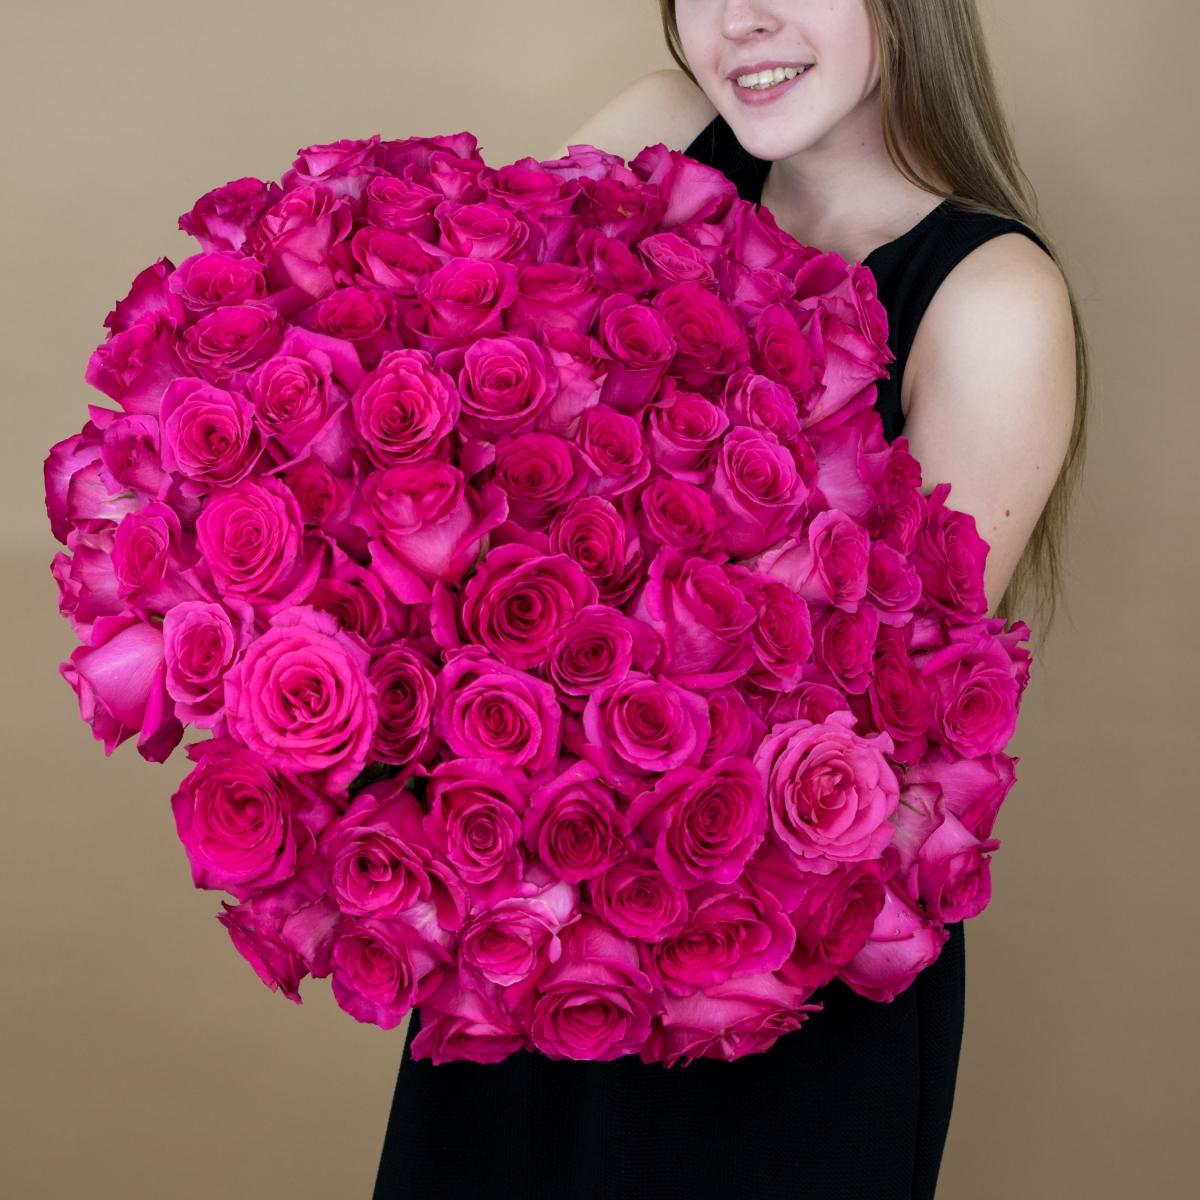 Букет из розовых роз 75 шт. (40 см) (артикул букета  15092kl)